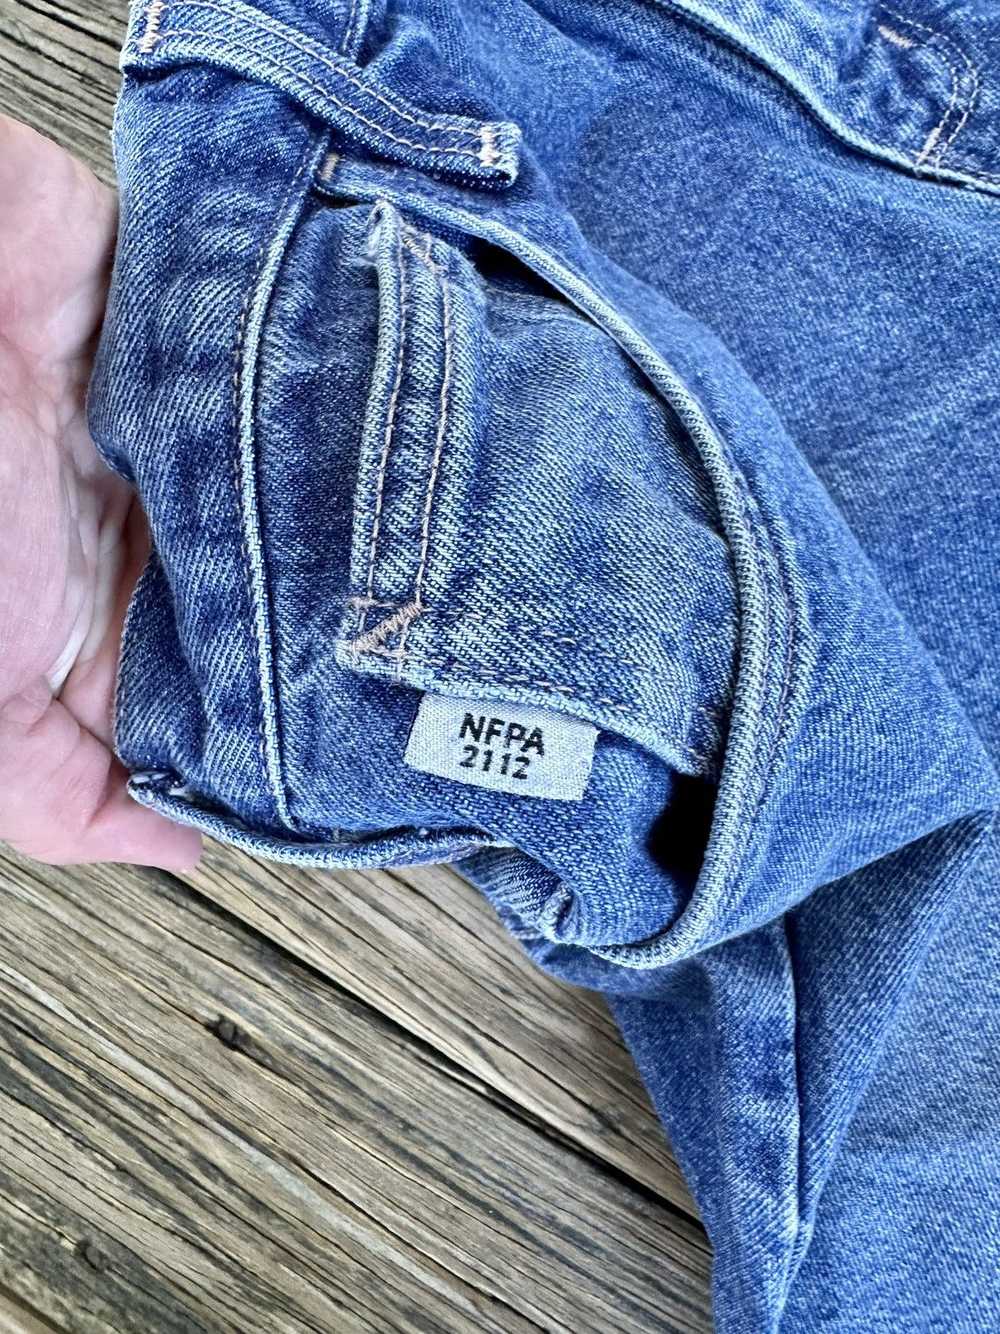 Carhartt Carhartt Fire Resistant Jeans - image 6